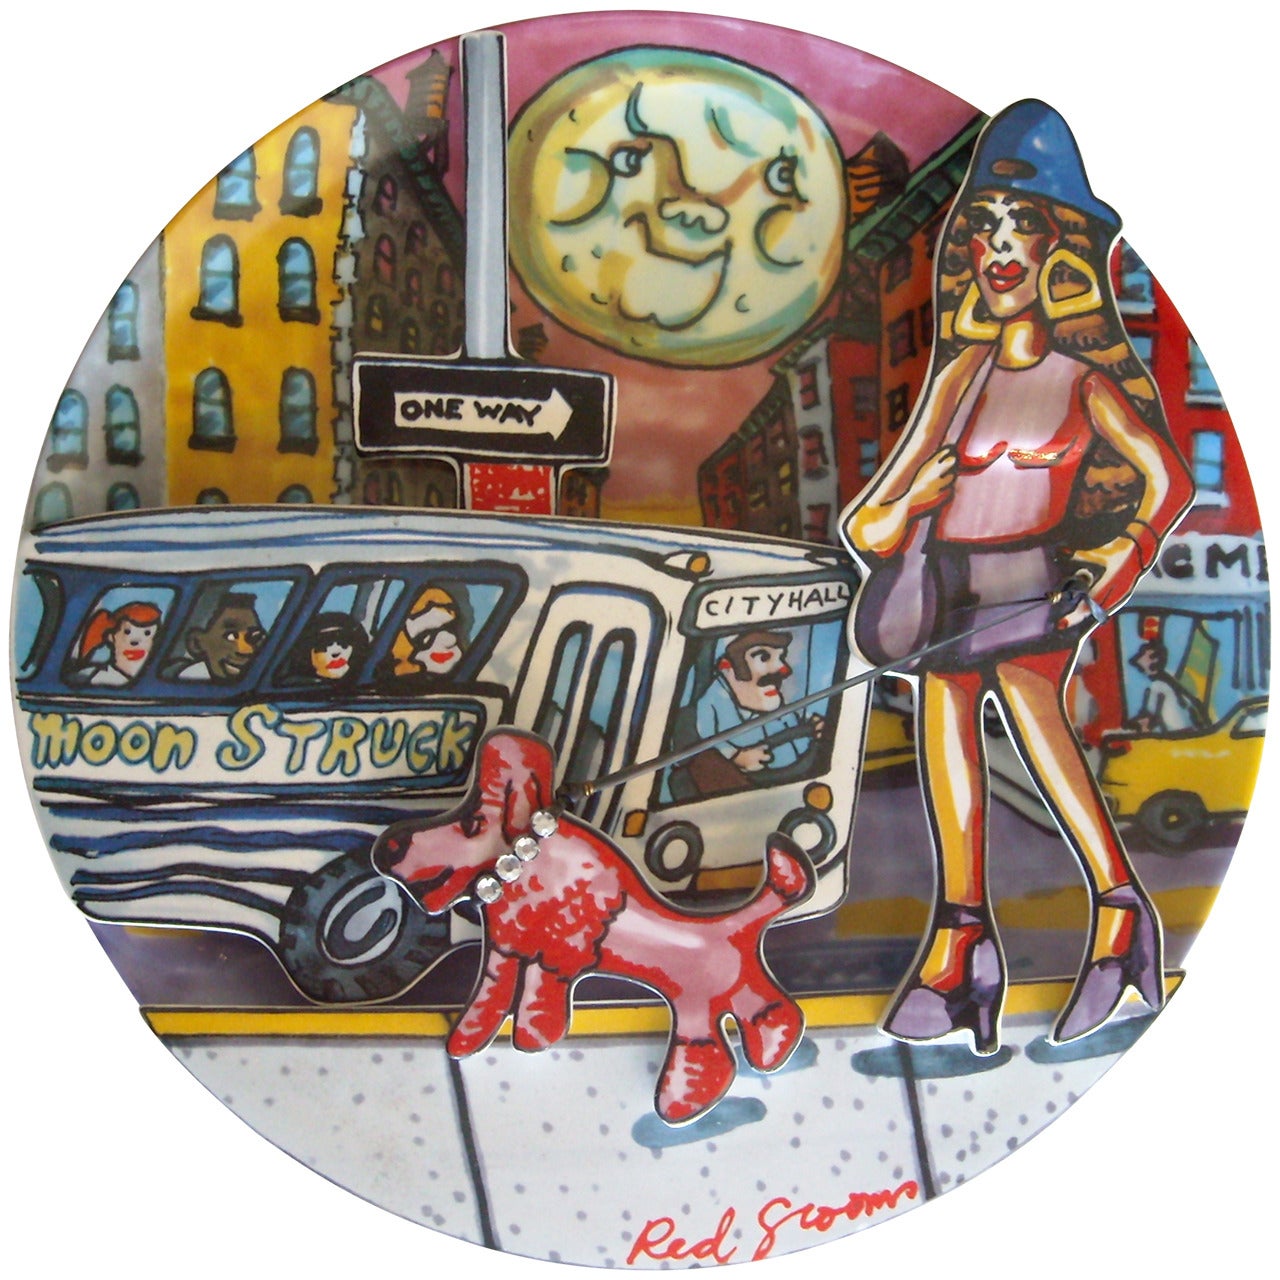 Pop Art, Red Grooms Ceramic Limited Edition Plate Sculpture, Moonstruck